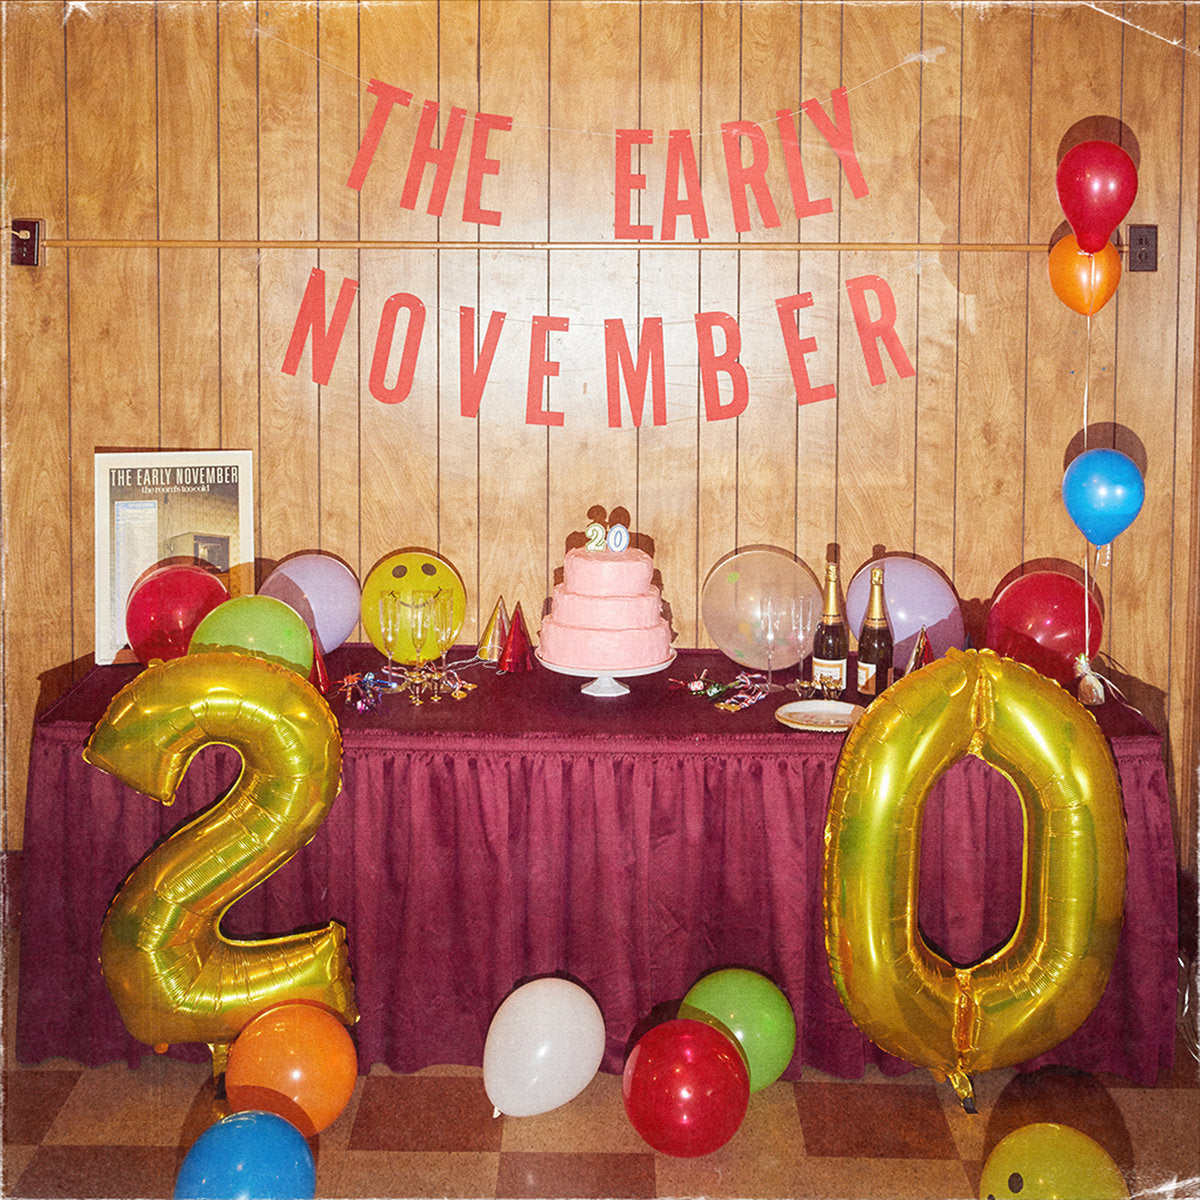 Early November - Twenty